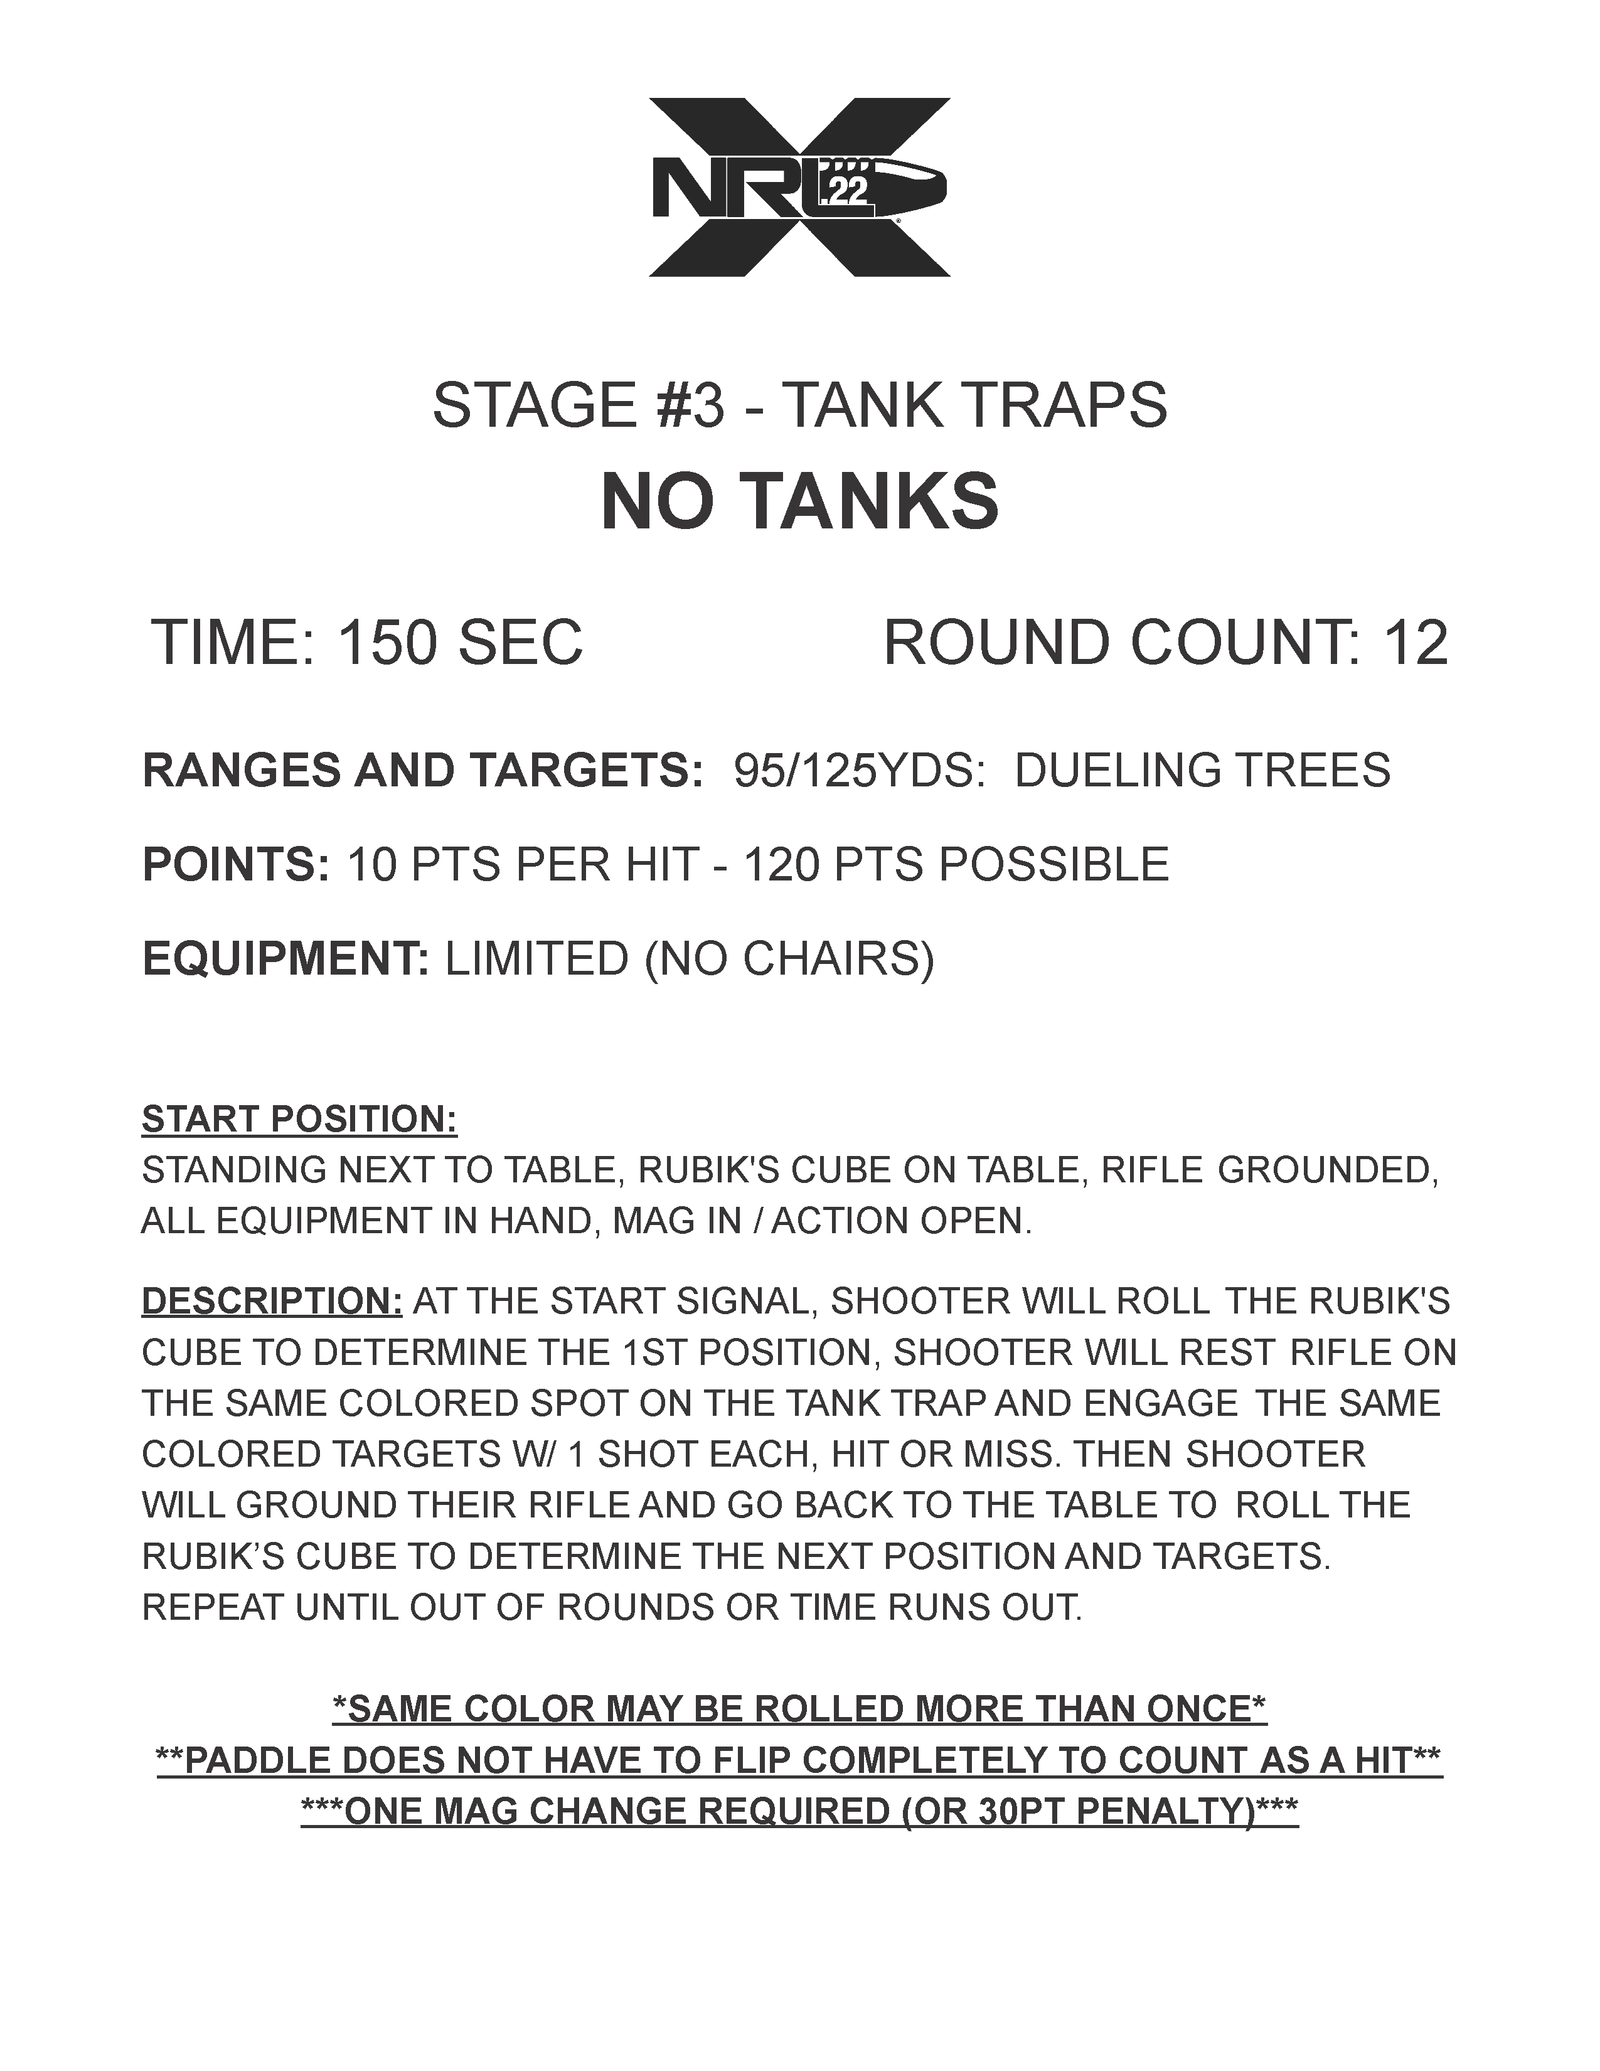 Stage 33: No Tanks